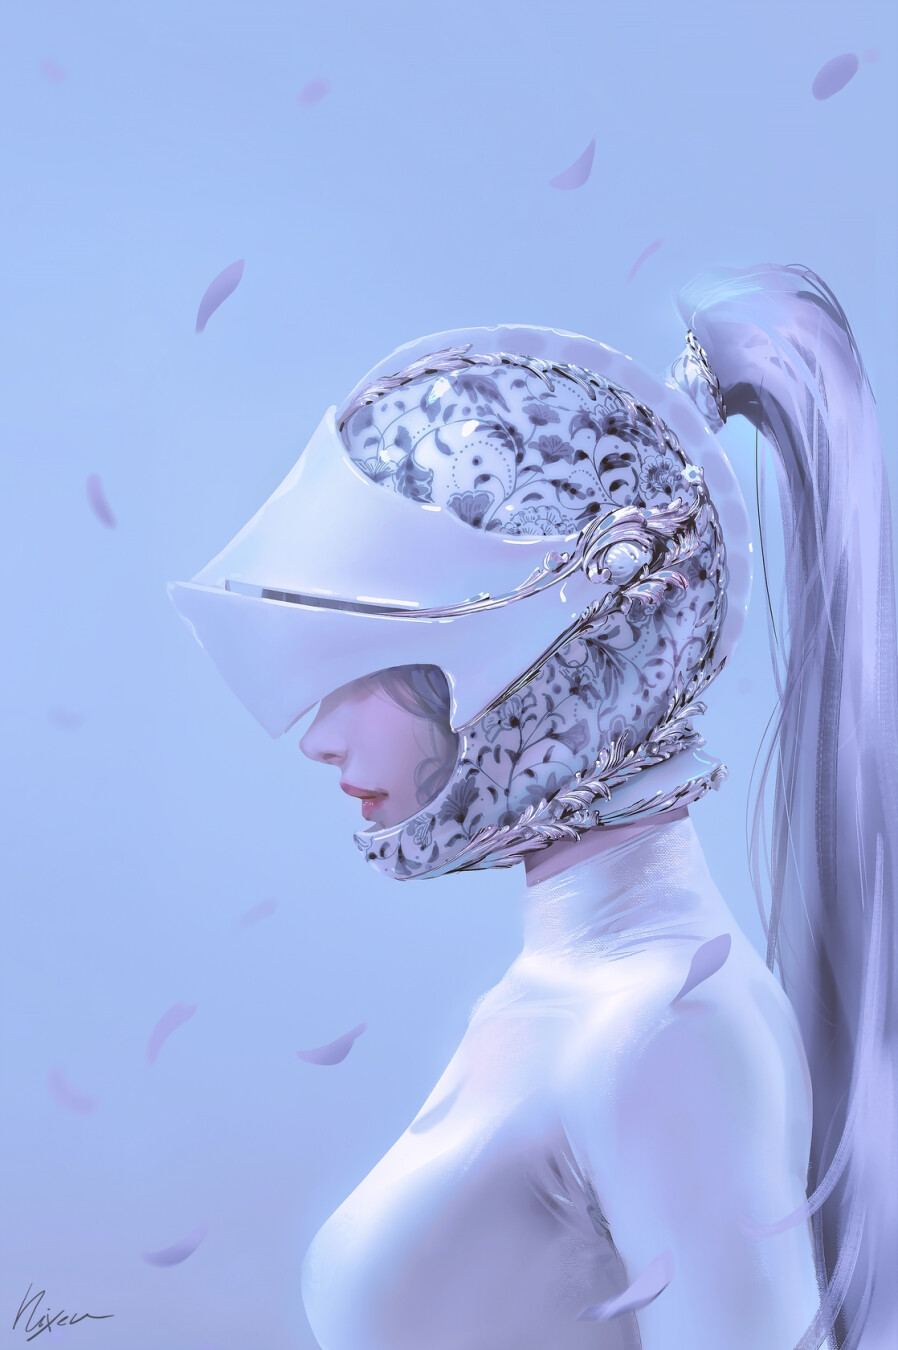 Nixeu Drawing Women Profile Ponytail Helmet Covered Eyes Feathers 898x1350